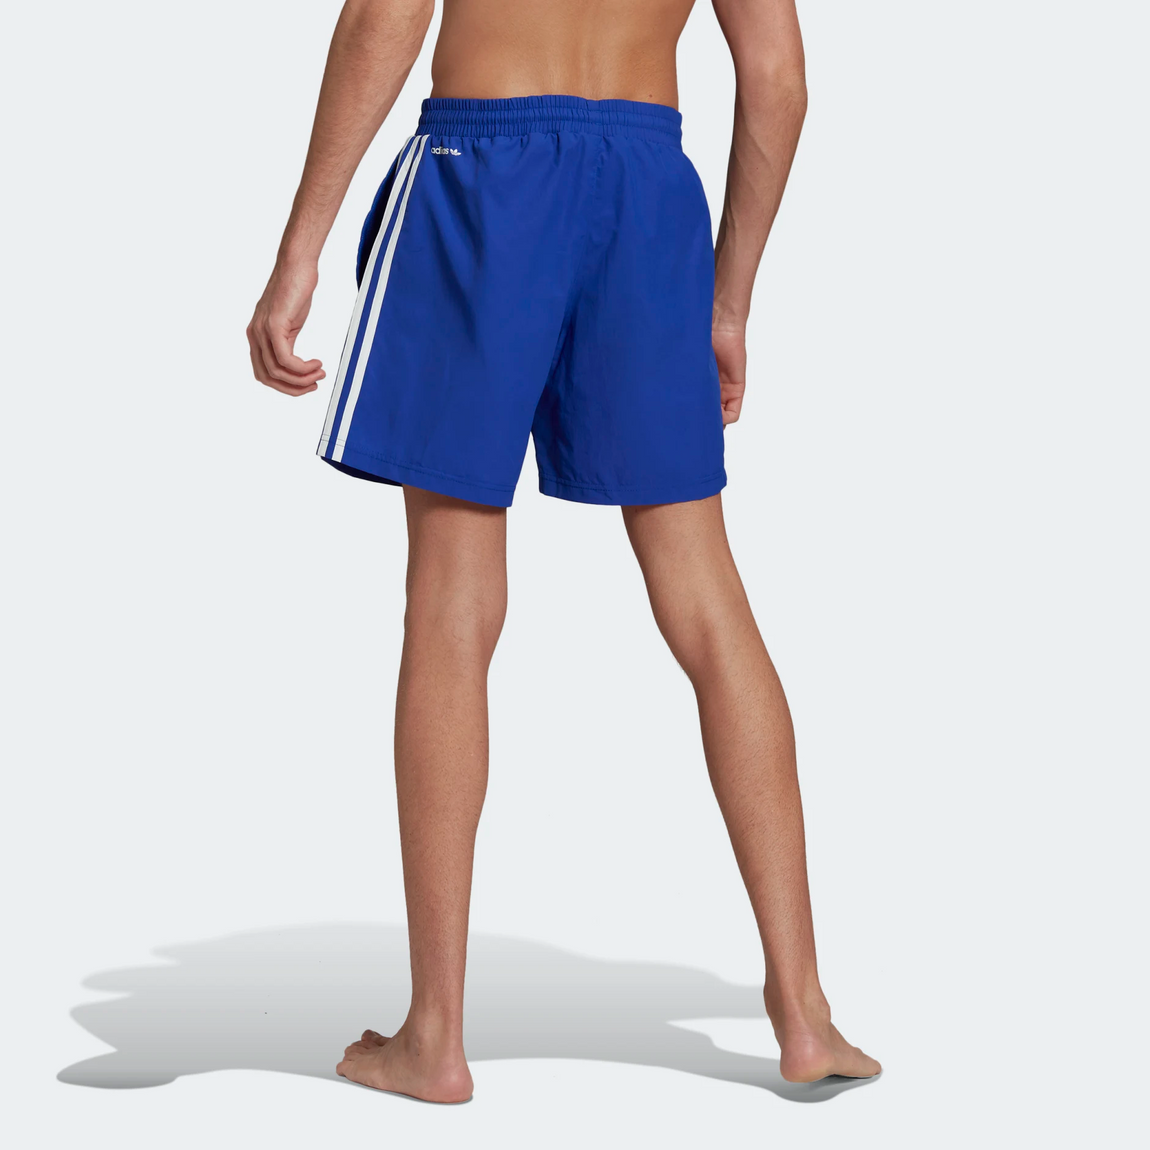 Adidas Graphic Stoked Fish Swim Shorts (Bold Blue/White) - Adidas Graphic Stoked Fish Swim Shorts (Bold Blue/White) - 